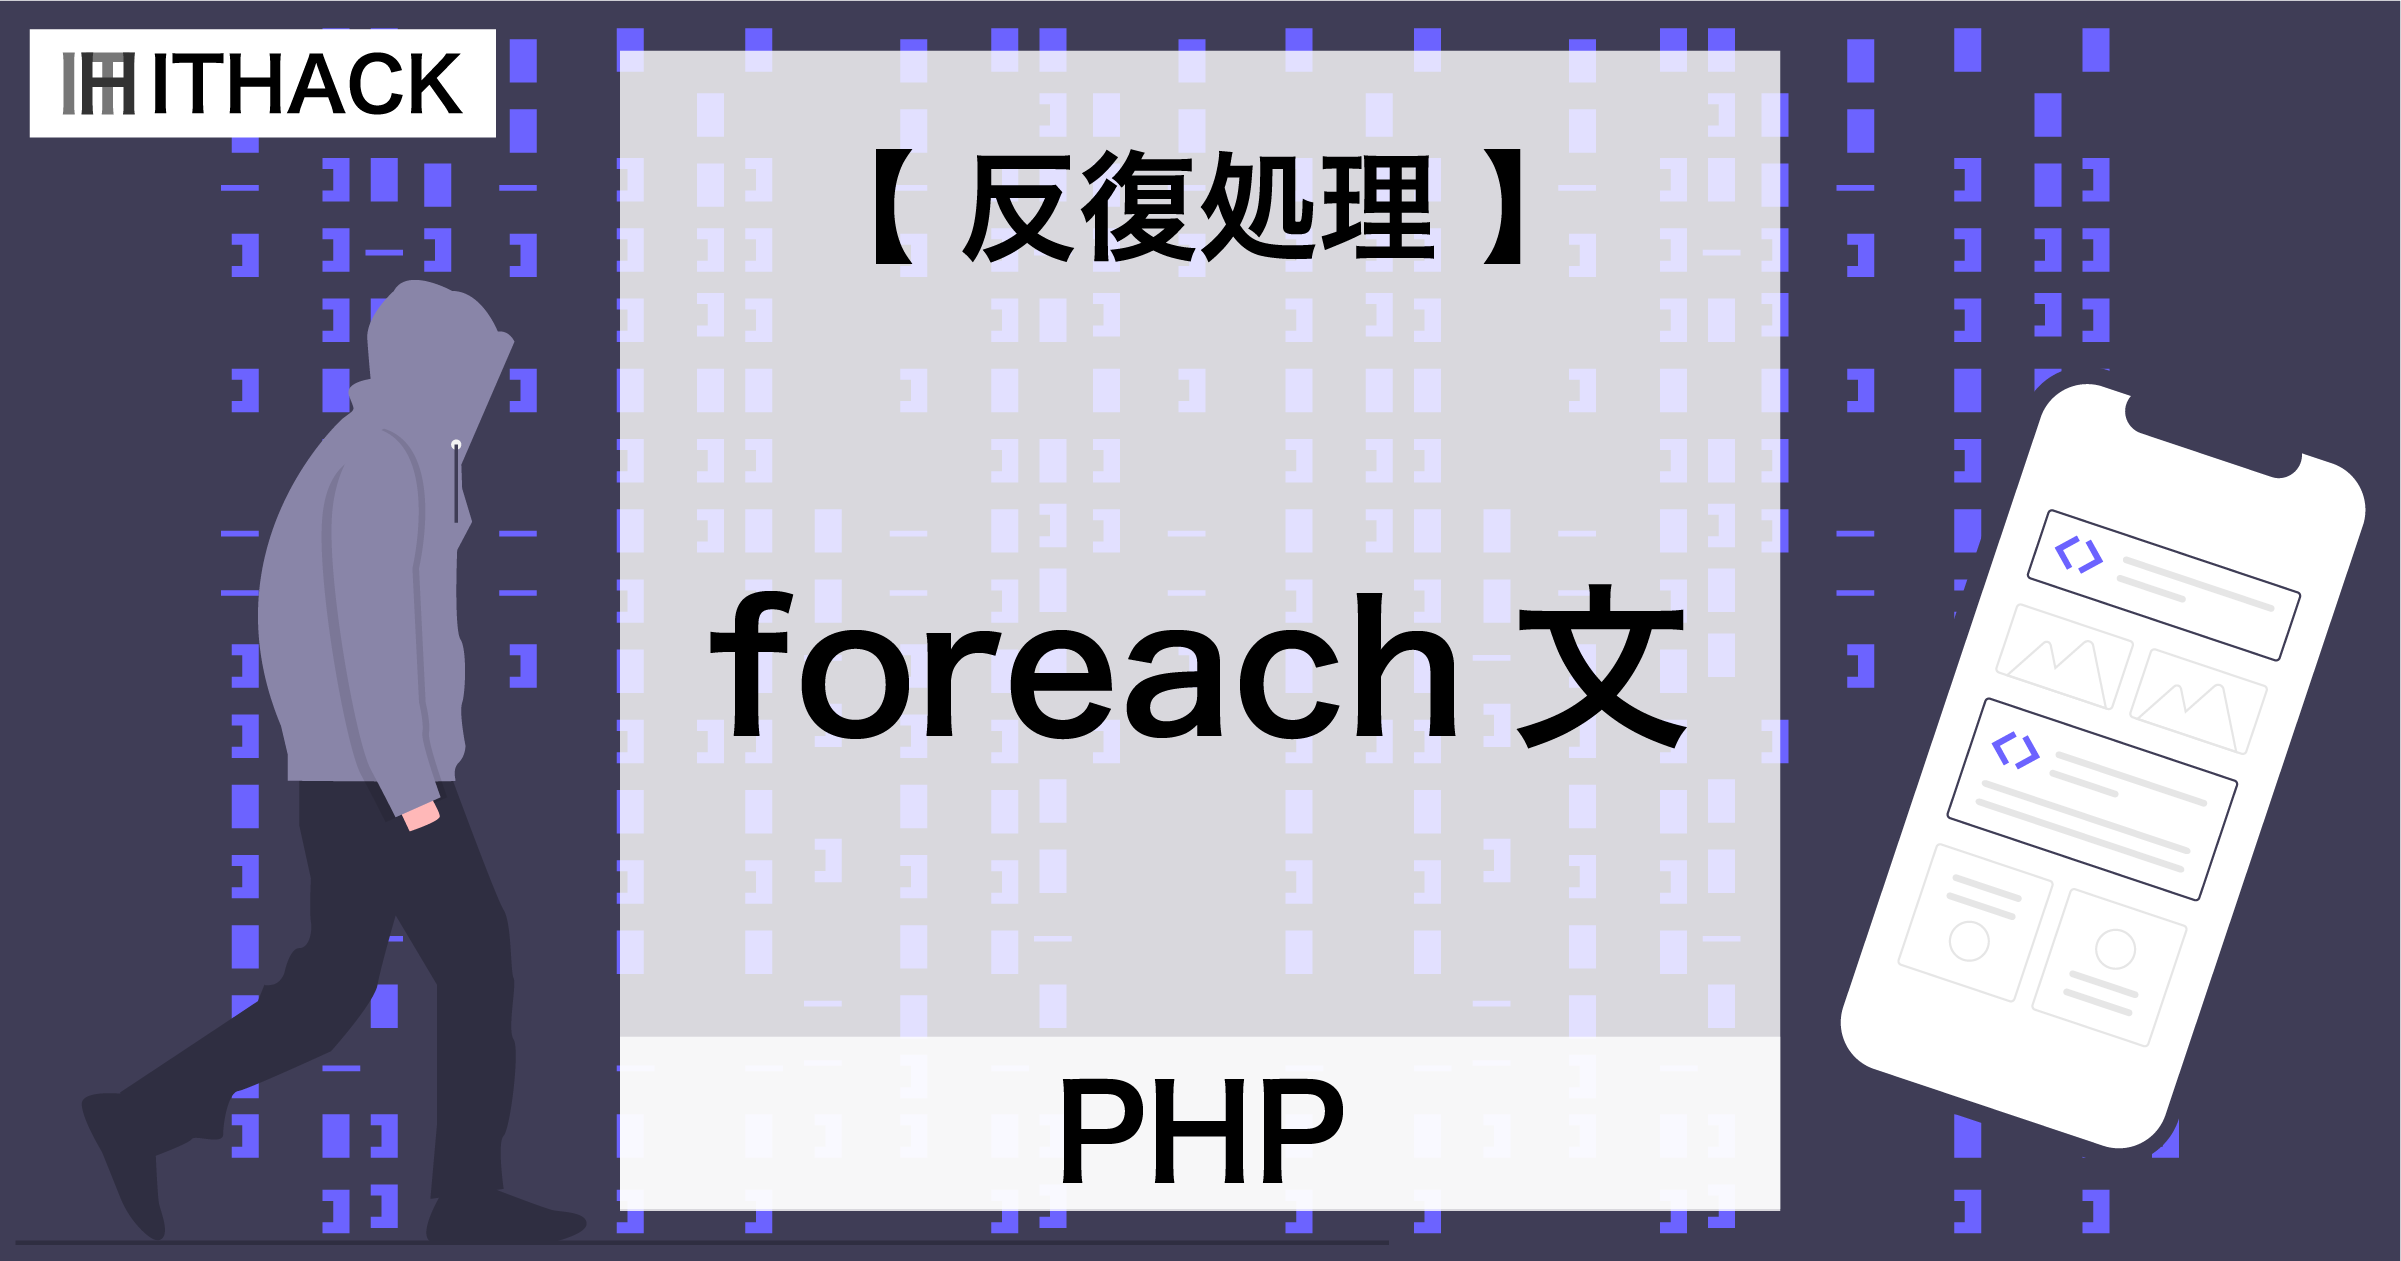 【PHP】foreach文 - 反復処理 / 配列の値を1つずつ取り出す繰り返し処理